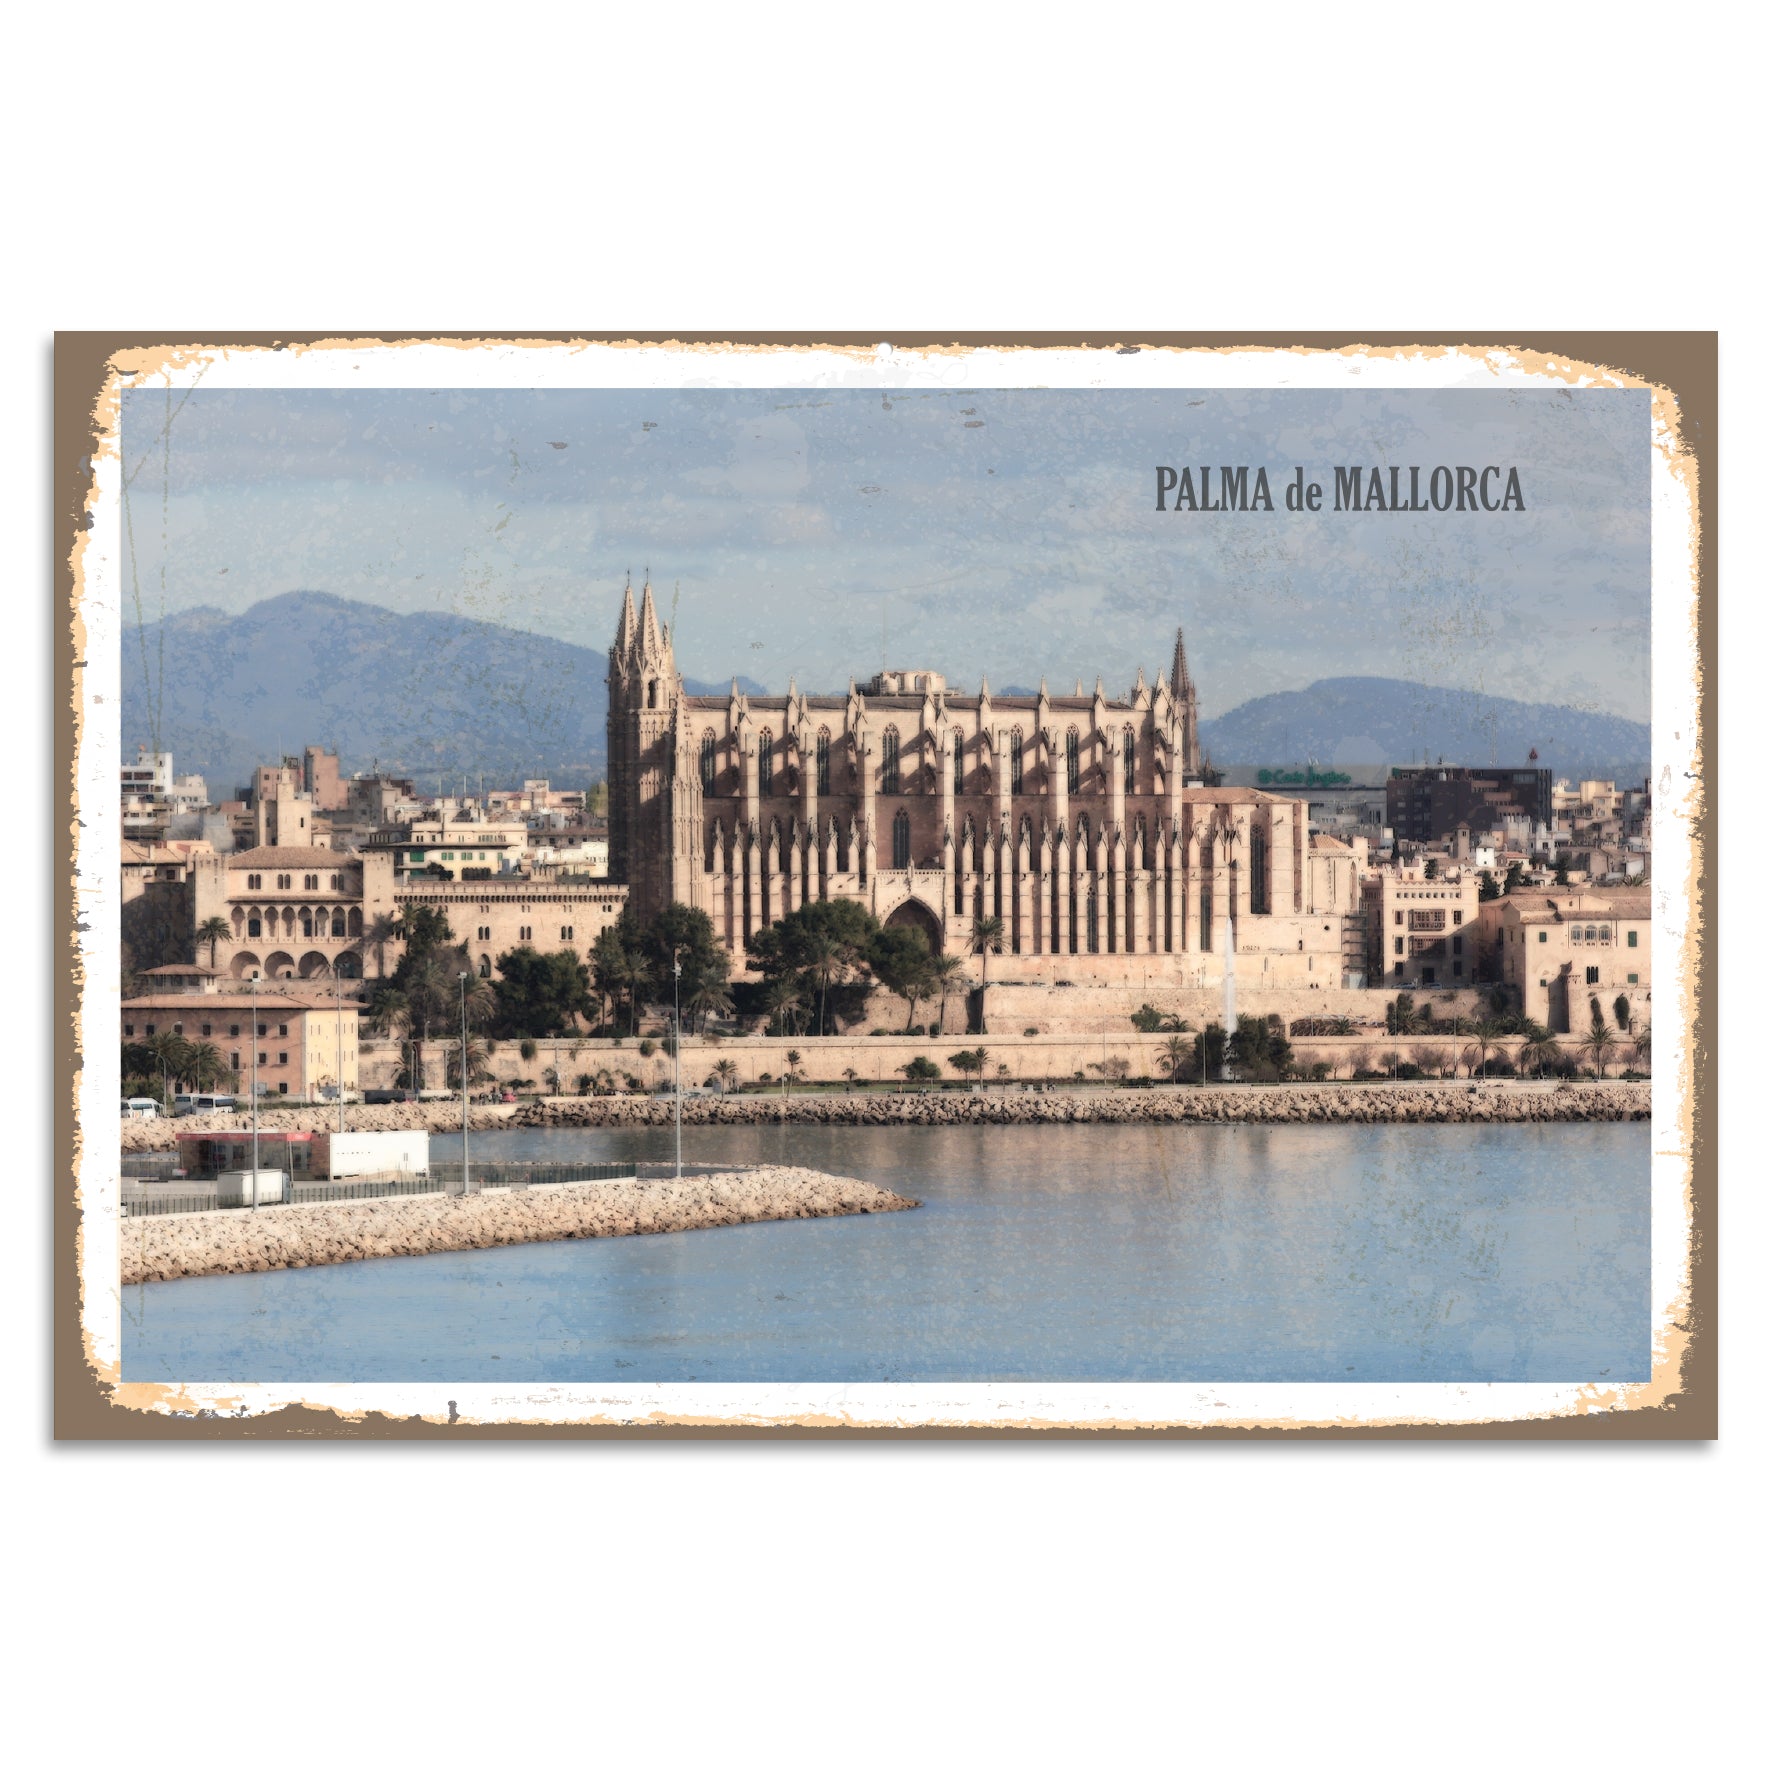 Blechschild - Palma de Mallorca